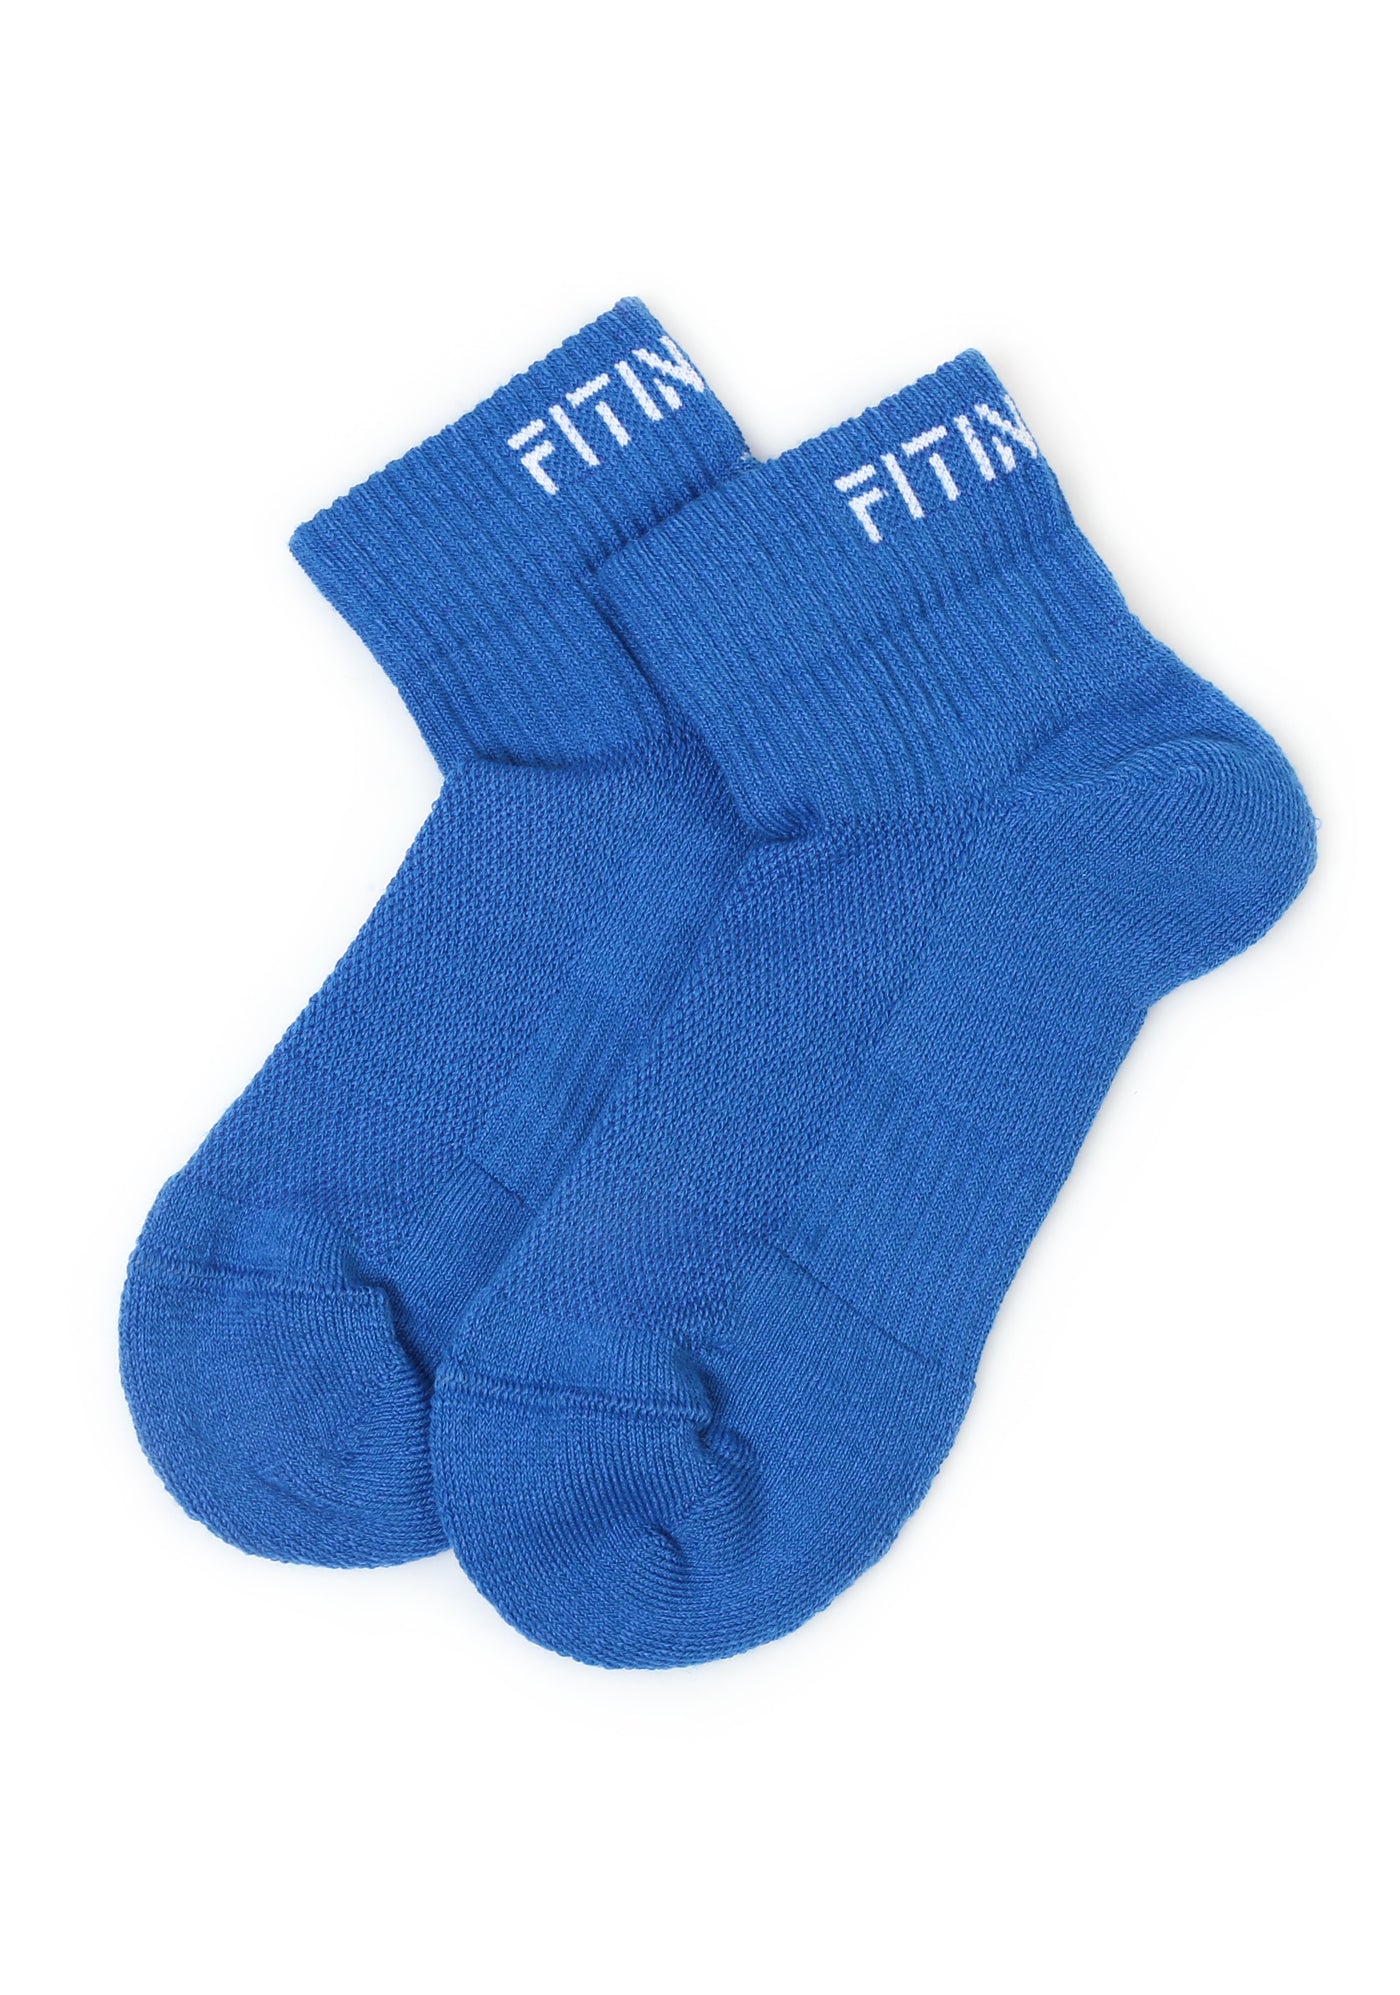 Premium Performance Quarter Trainer Sports Socks 2pk (Blue-Orange)